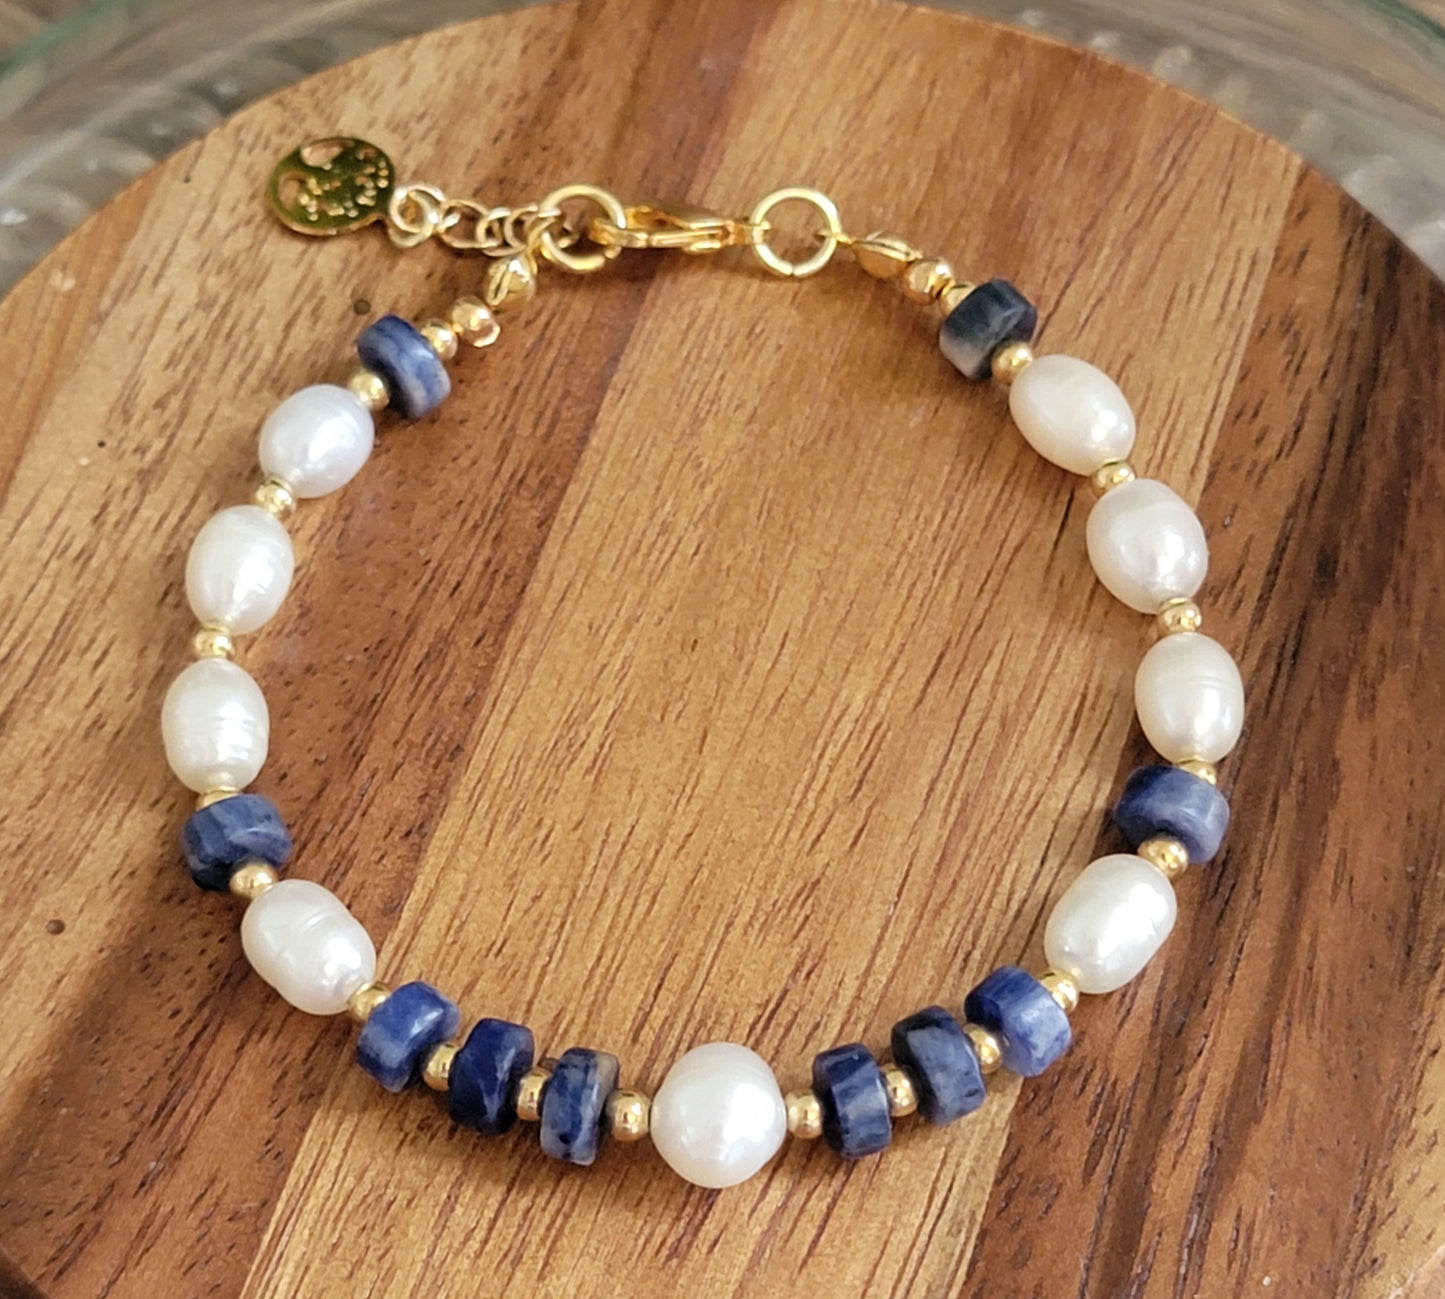 Handmade Bracelet. Dark Blue Beads. Freshwater Pearls, and 18k Gold-Filled Details